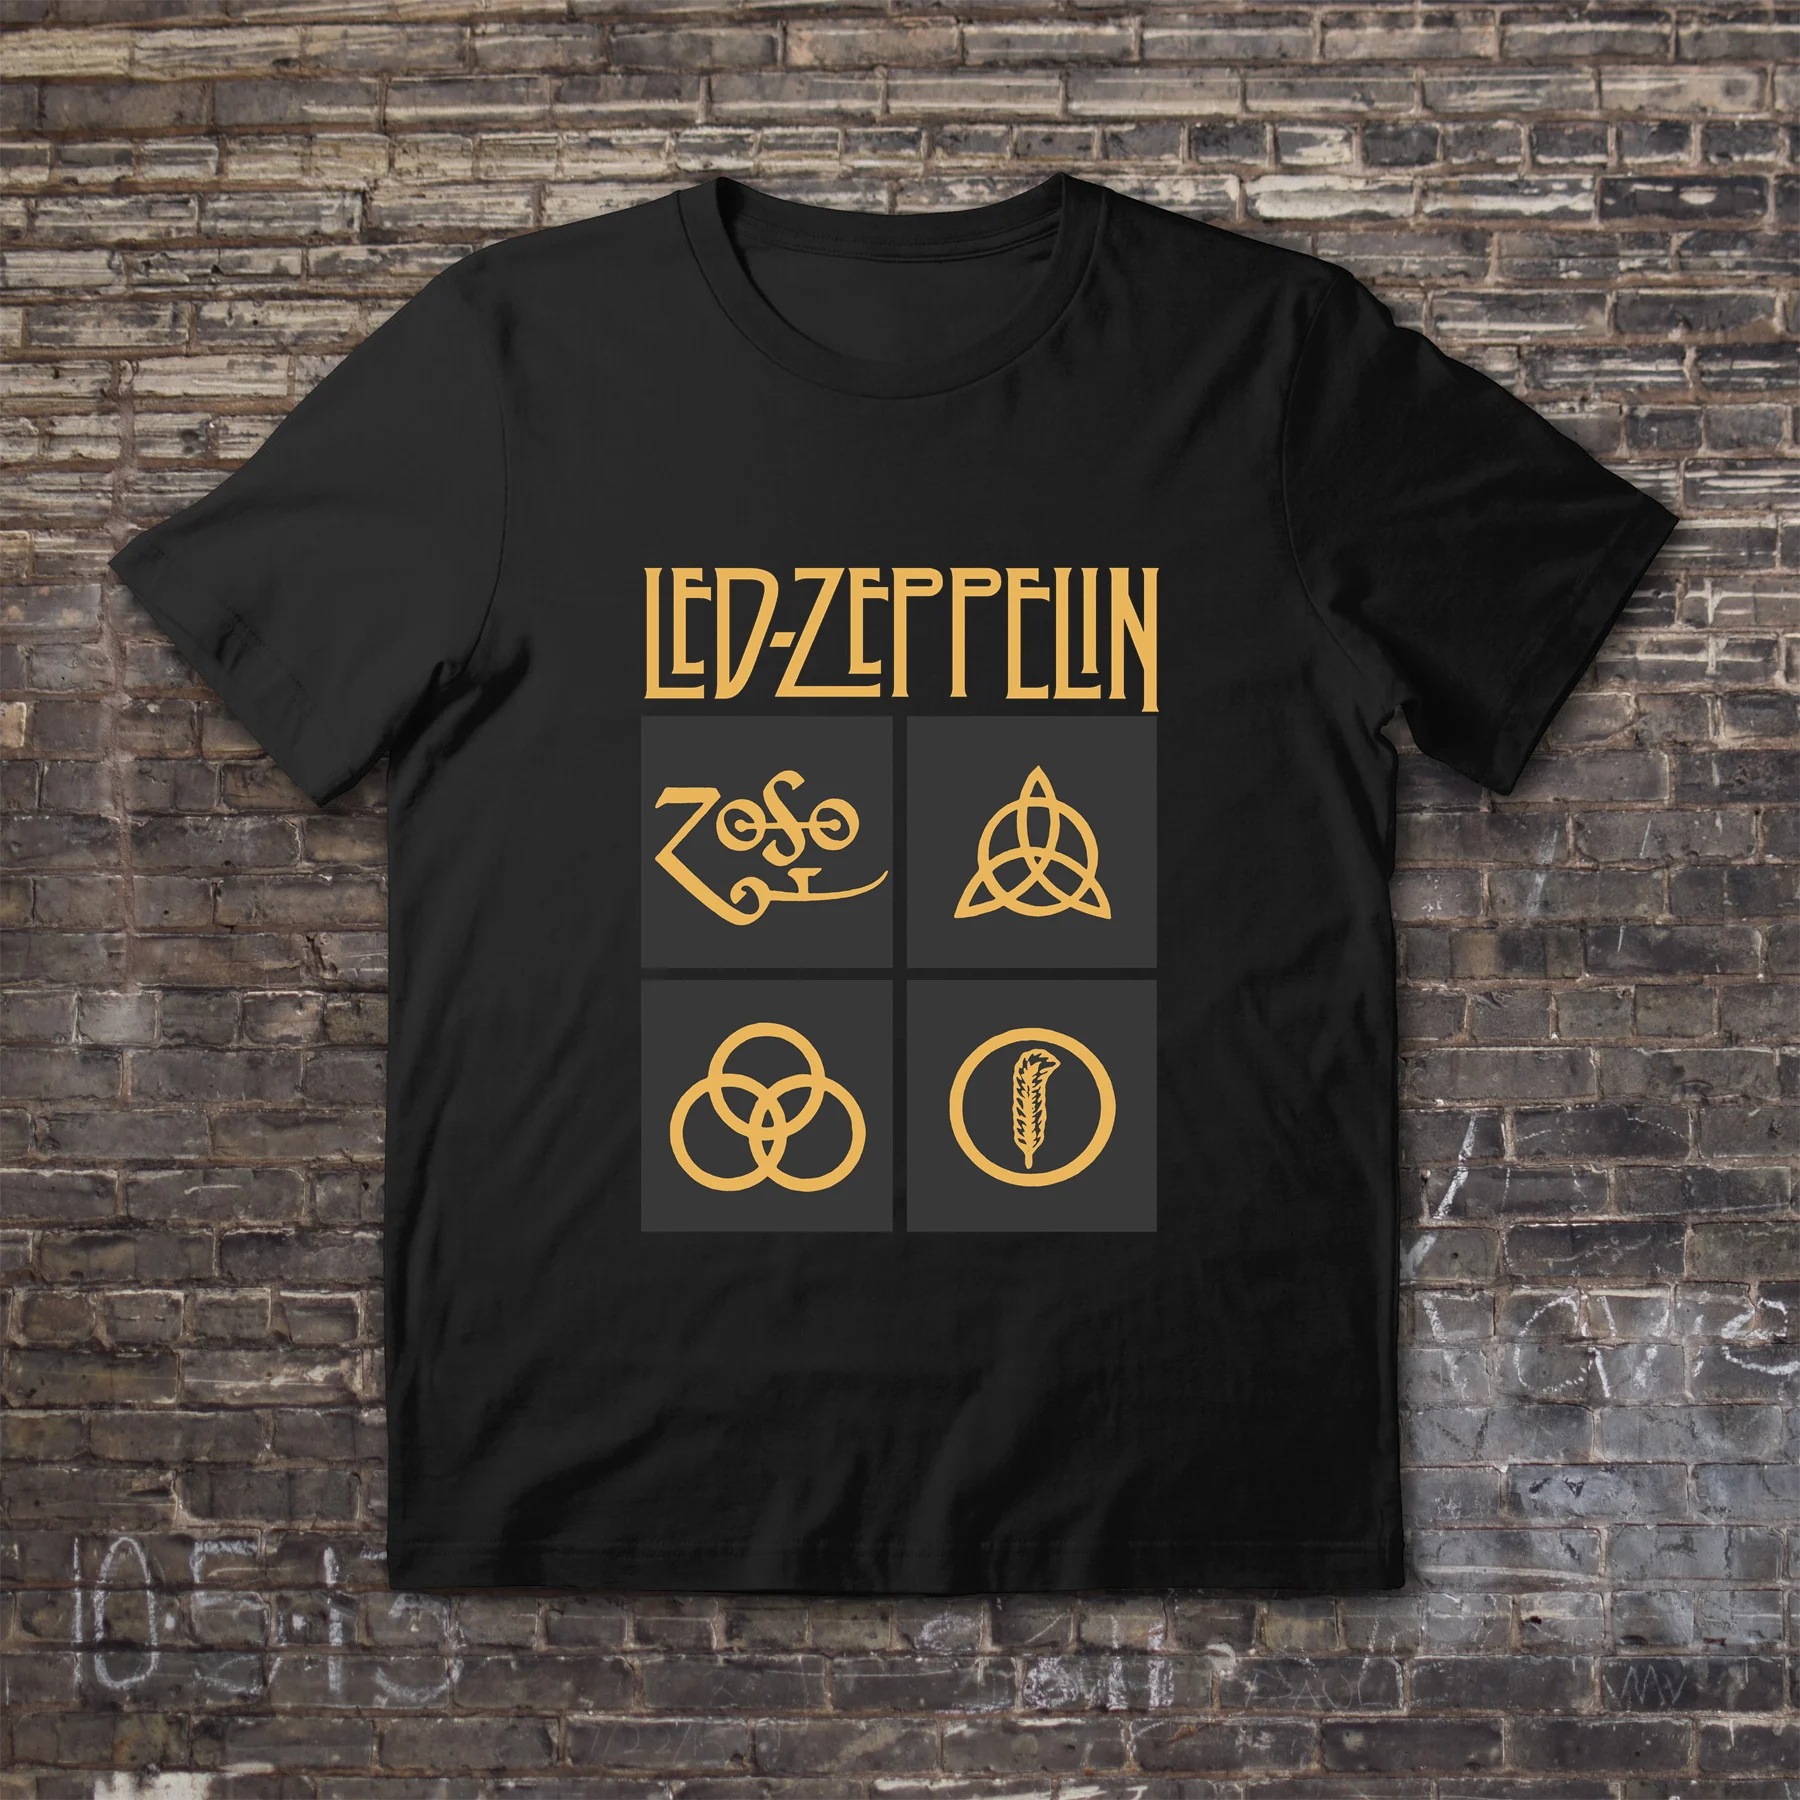 

Amazing Tees Male T Shirt Casual Oversized Essential Led Tour Zeppelin Gold Symbols & Black Squares T-shirt Men T-shirts S-3XL